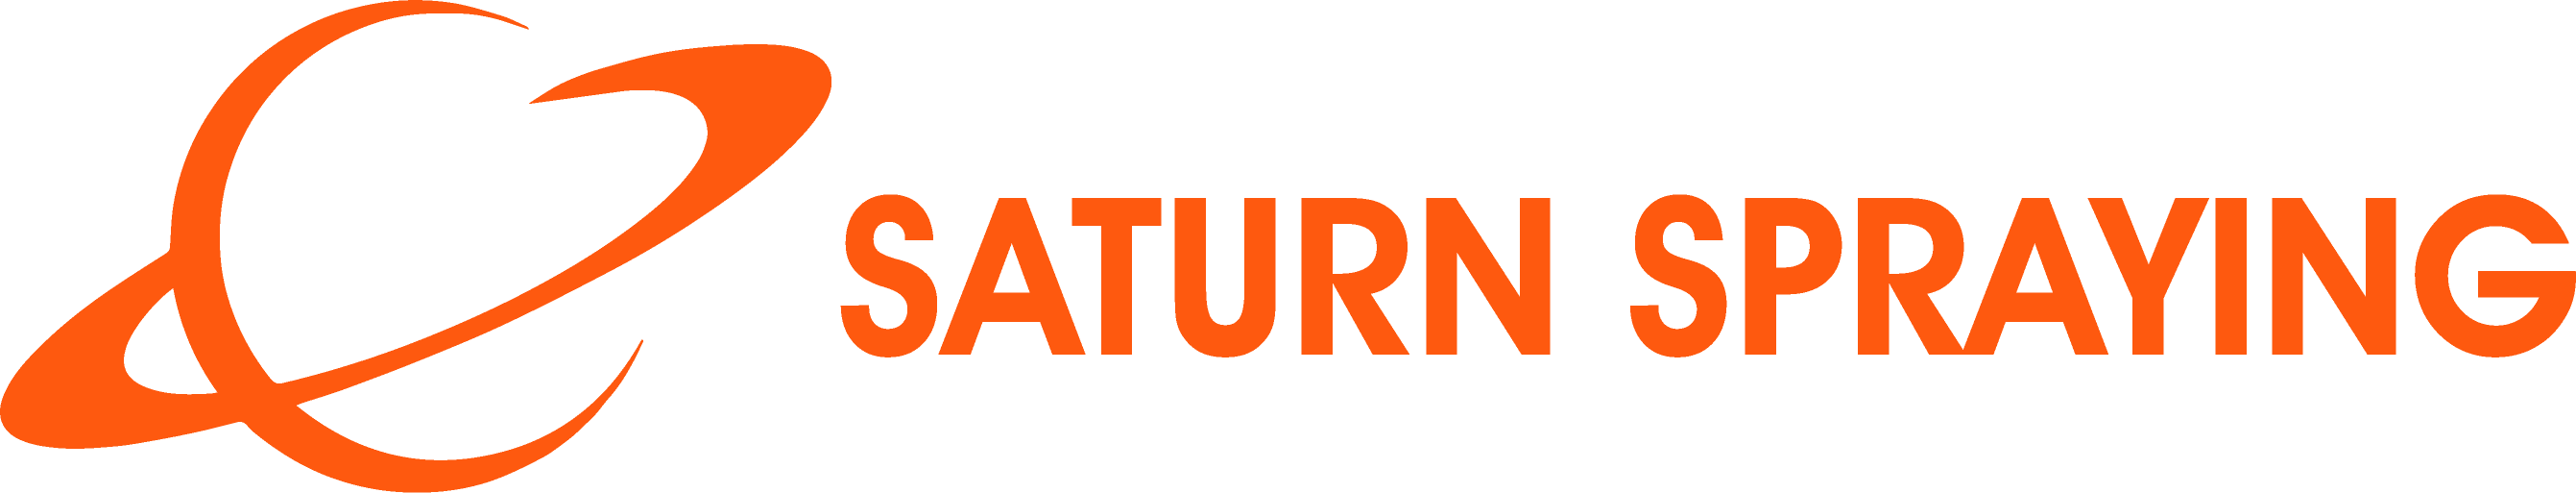 Saturn Spraying Ltd Logo